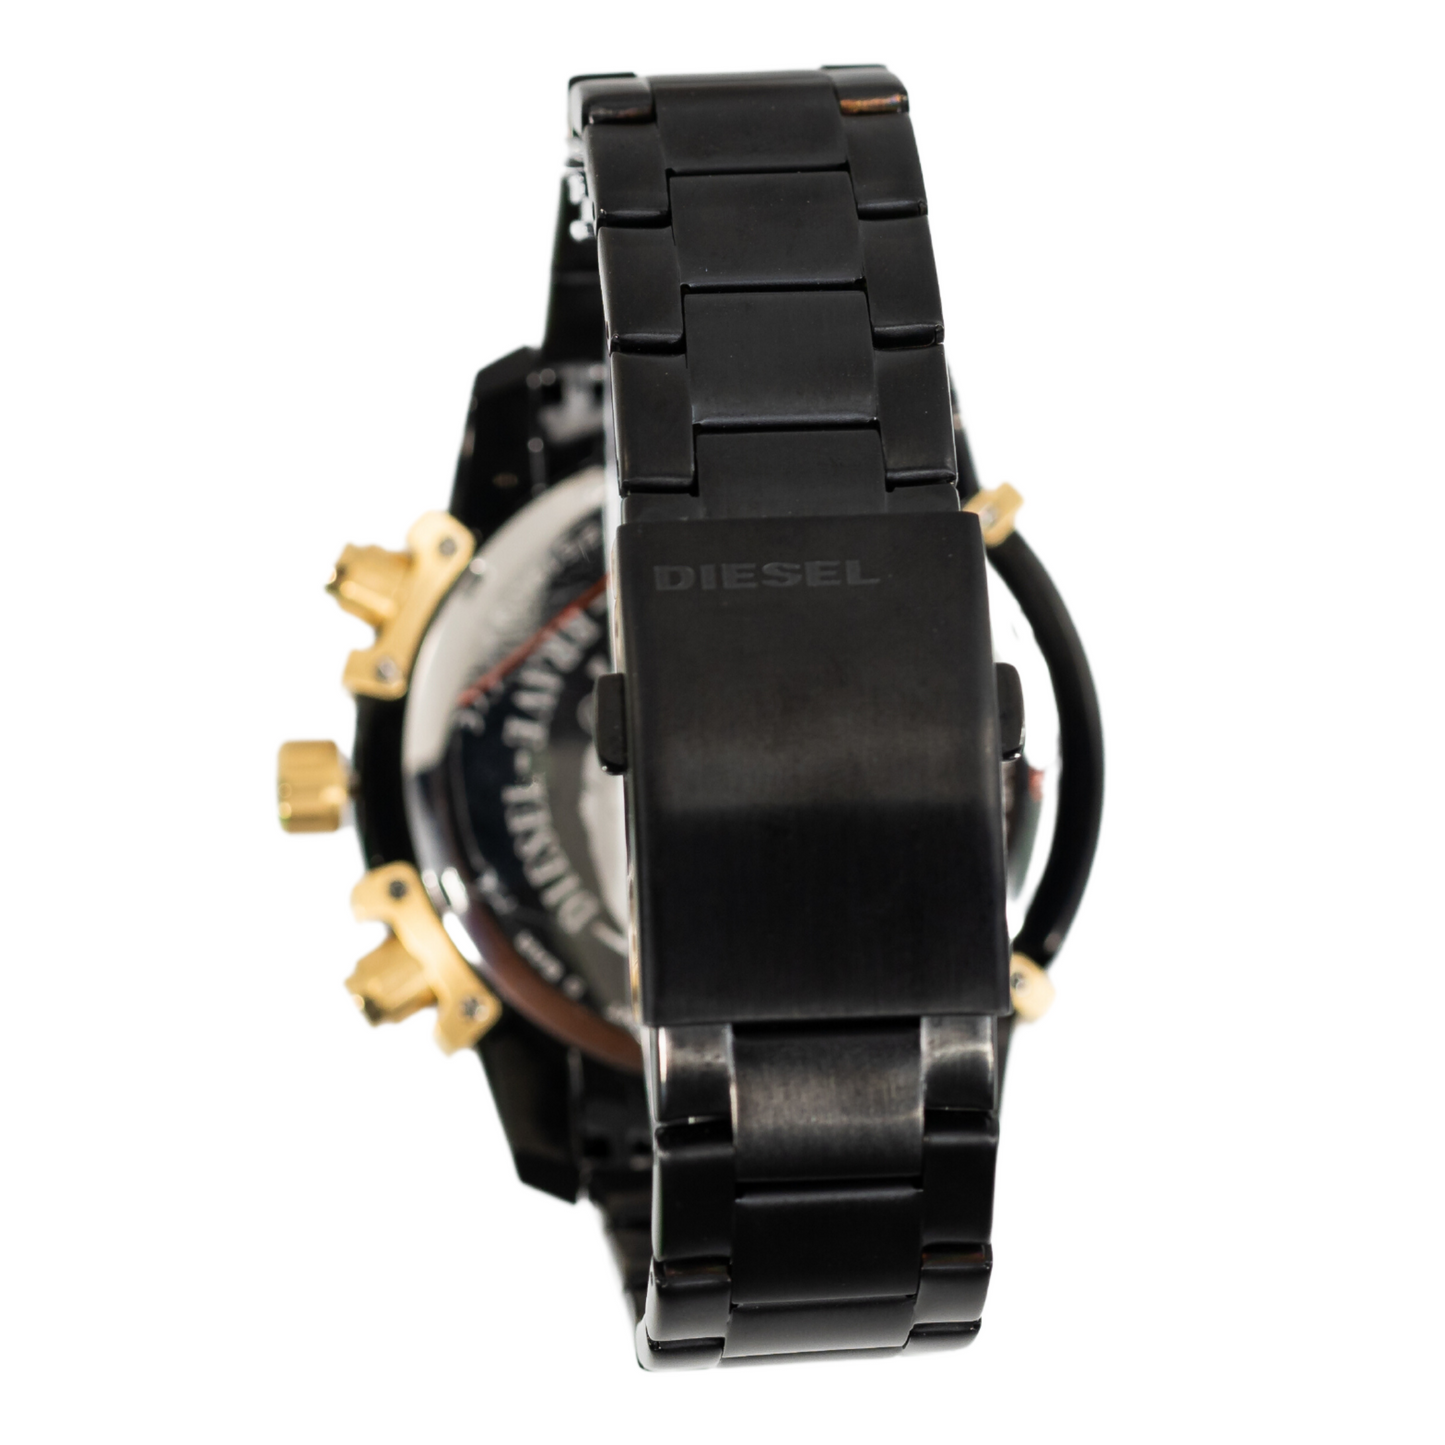 Diesel Griffed Chronograph Stainless Steel Watch - DZ4525